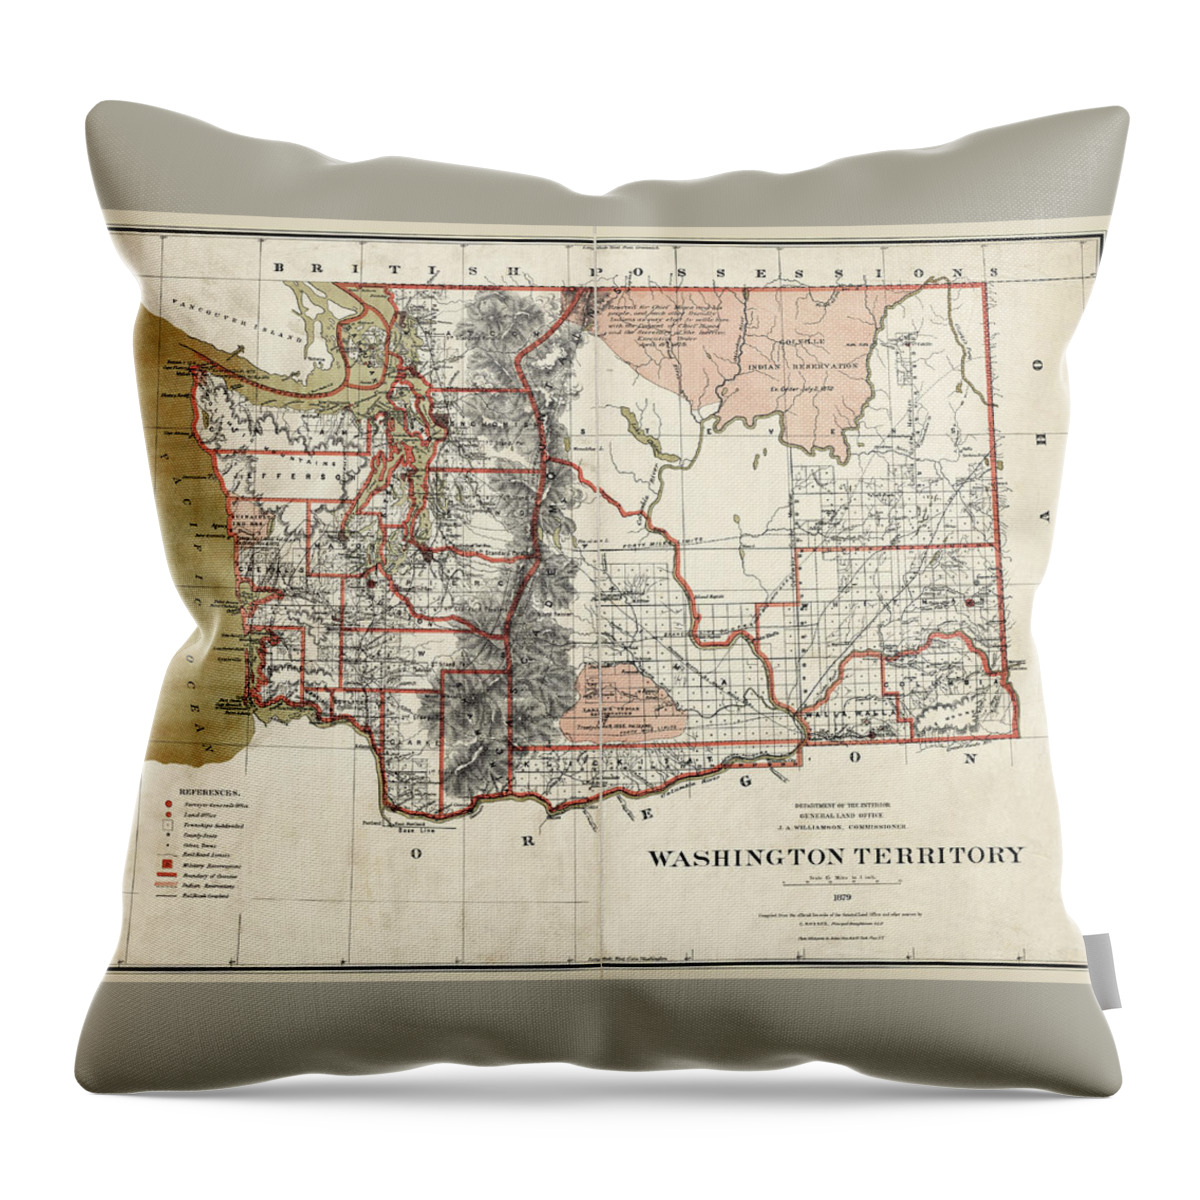 Washington Territory Throw Pillow featuring the photograph Washington Territory Map 1879 by Phil Cardamone